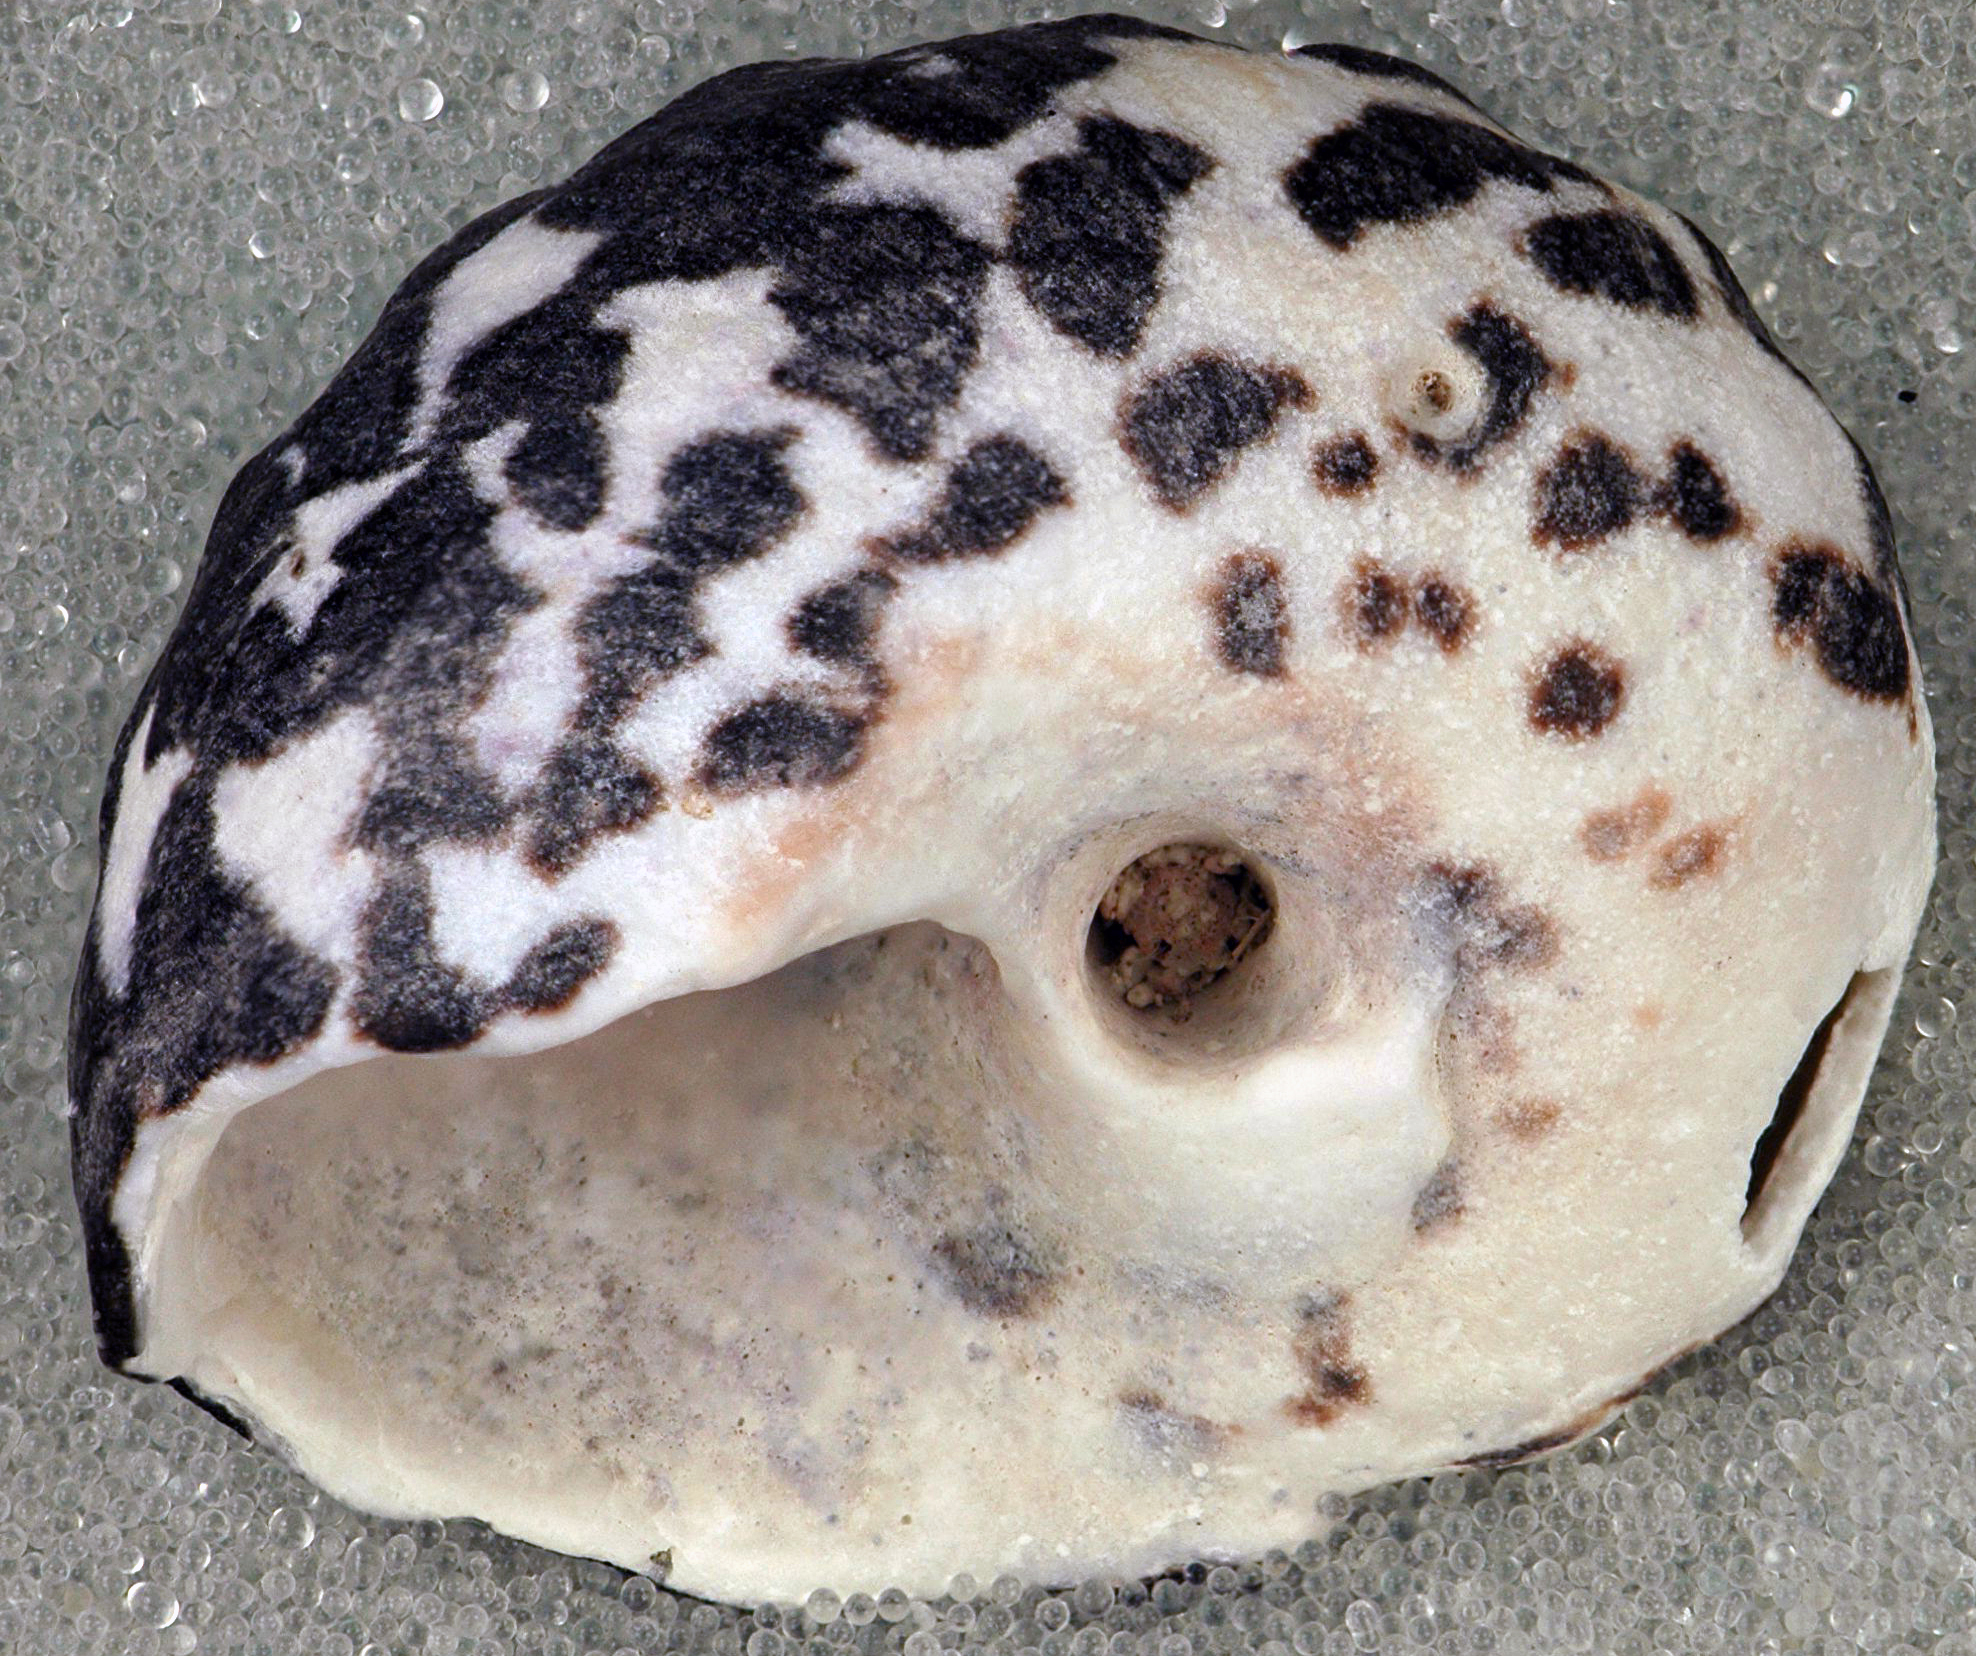 SeaShell News, 4-5-15, Top Shell, Cittarium pica (magpie snail) (San Salvador Island, Bahamas) 4 by James St. John.